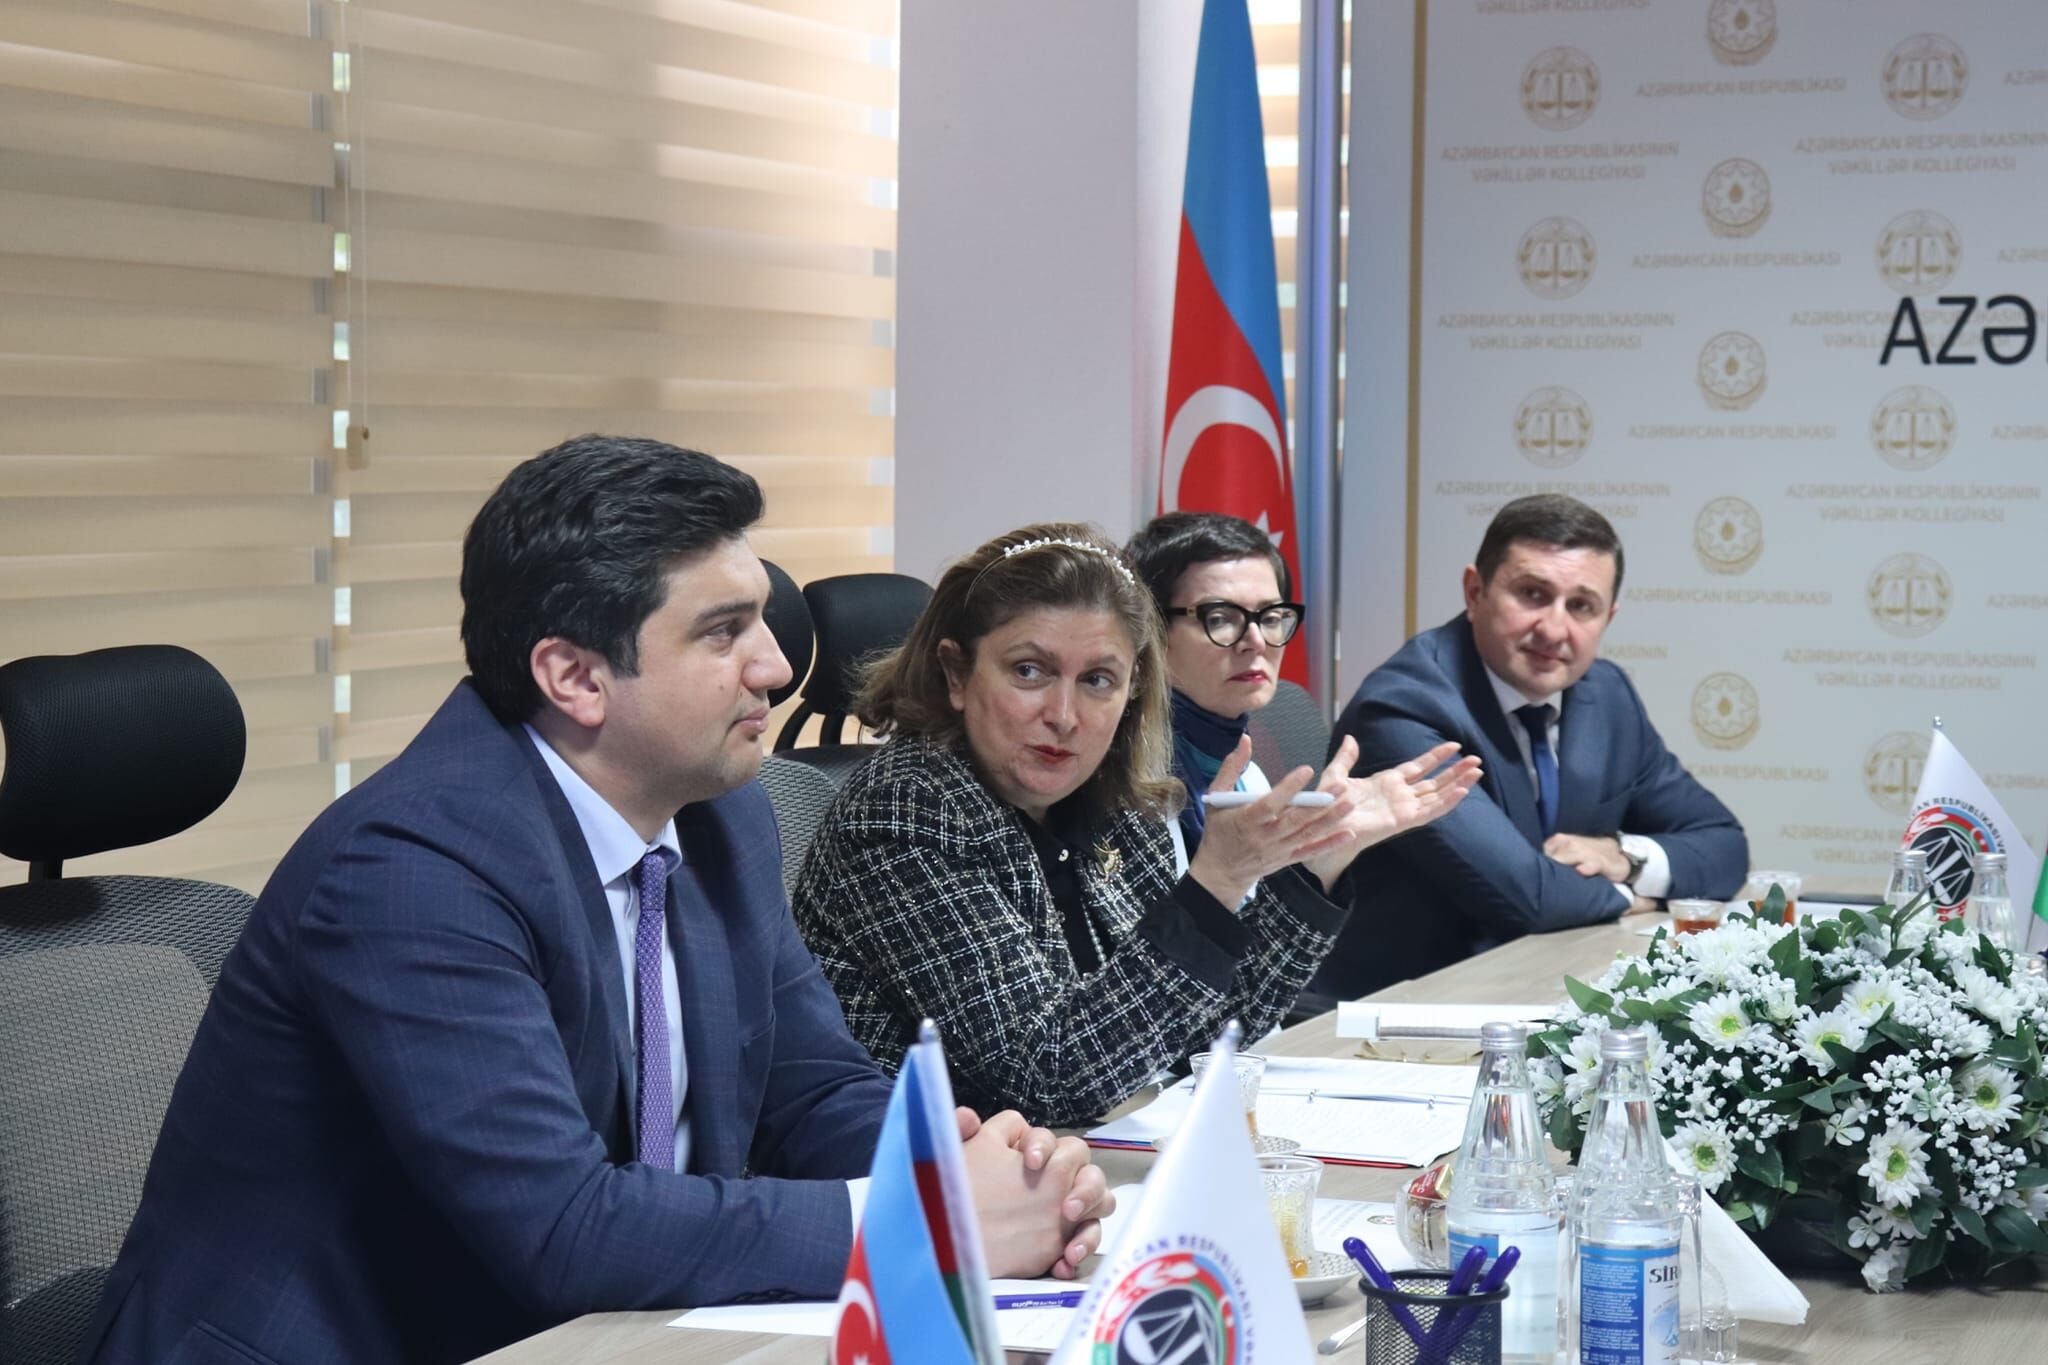  Chairman of the Azerbaijani Bar Association Anar Baghirov, and colleagues.